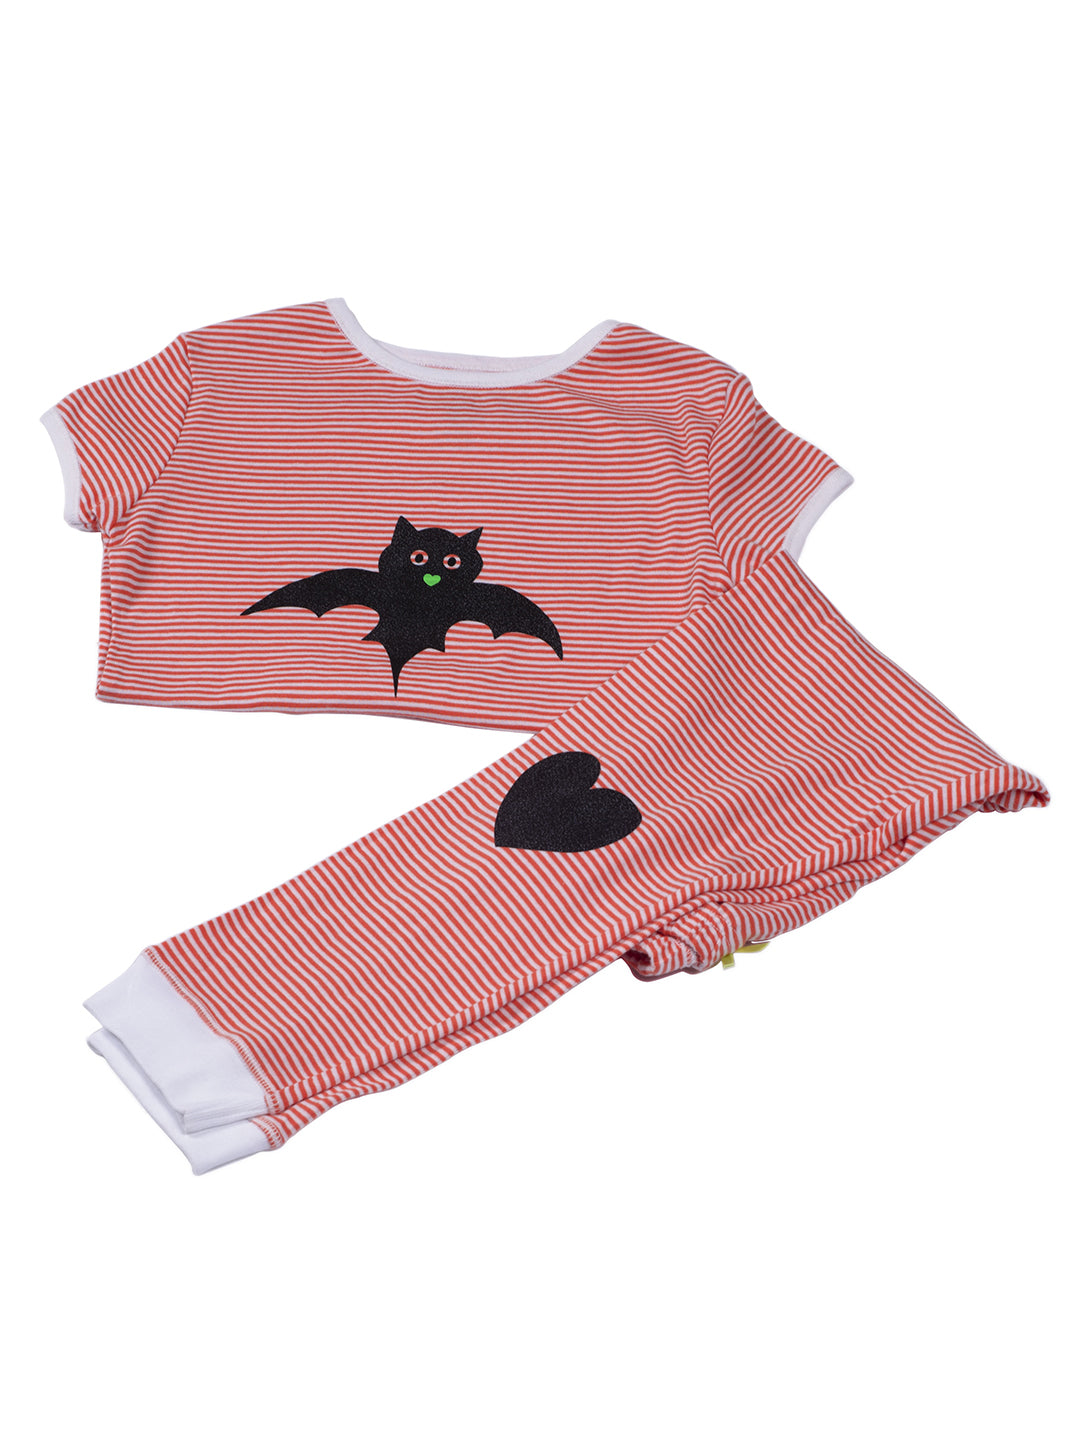 Little Bat Girls Pyjamas